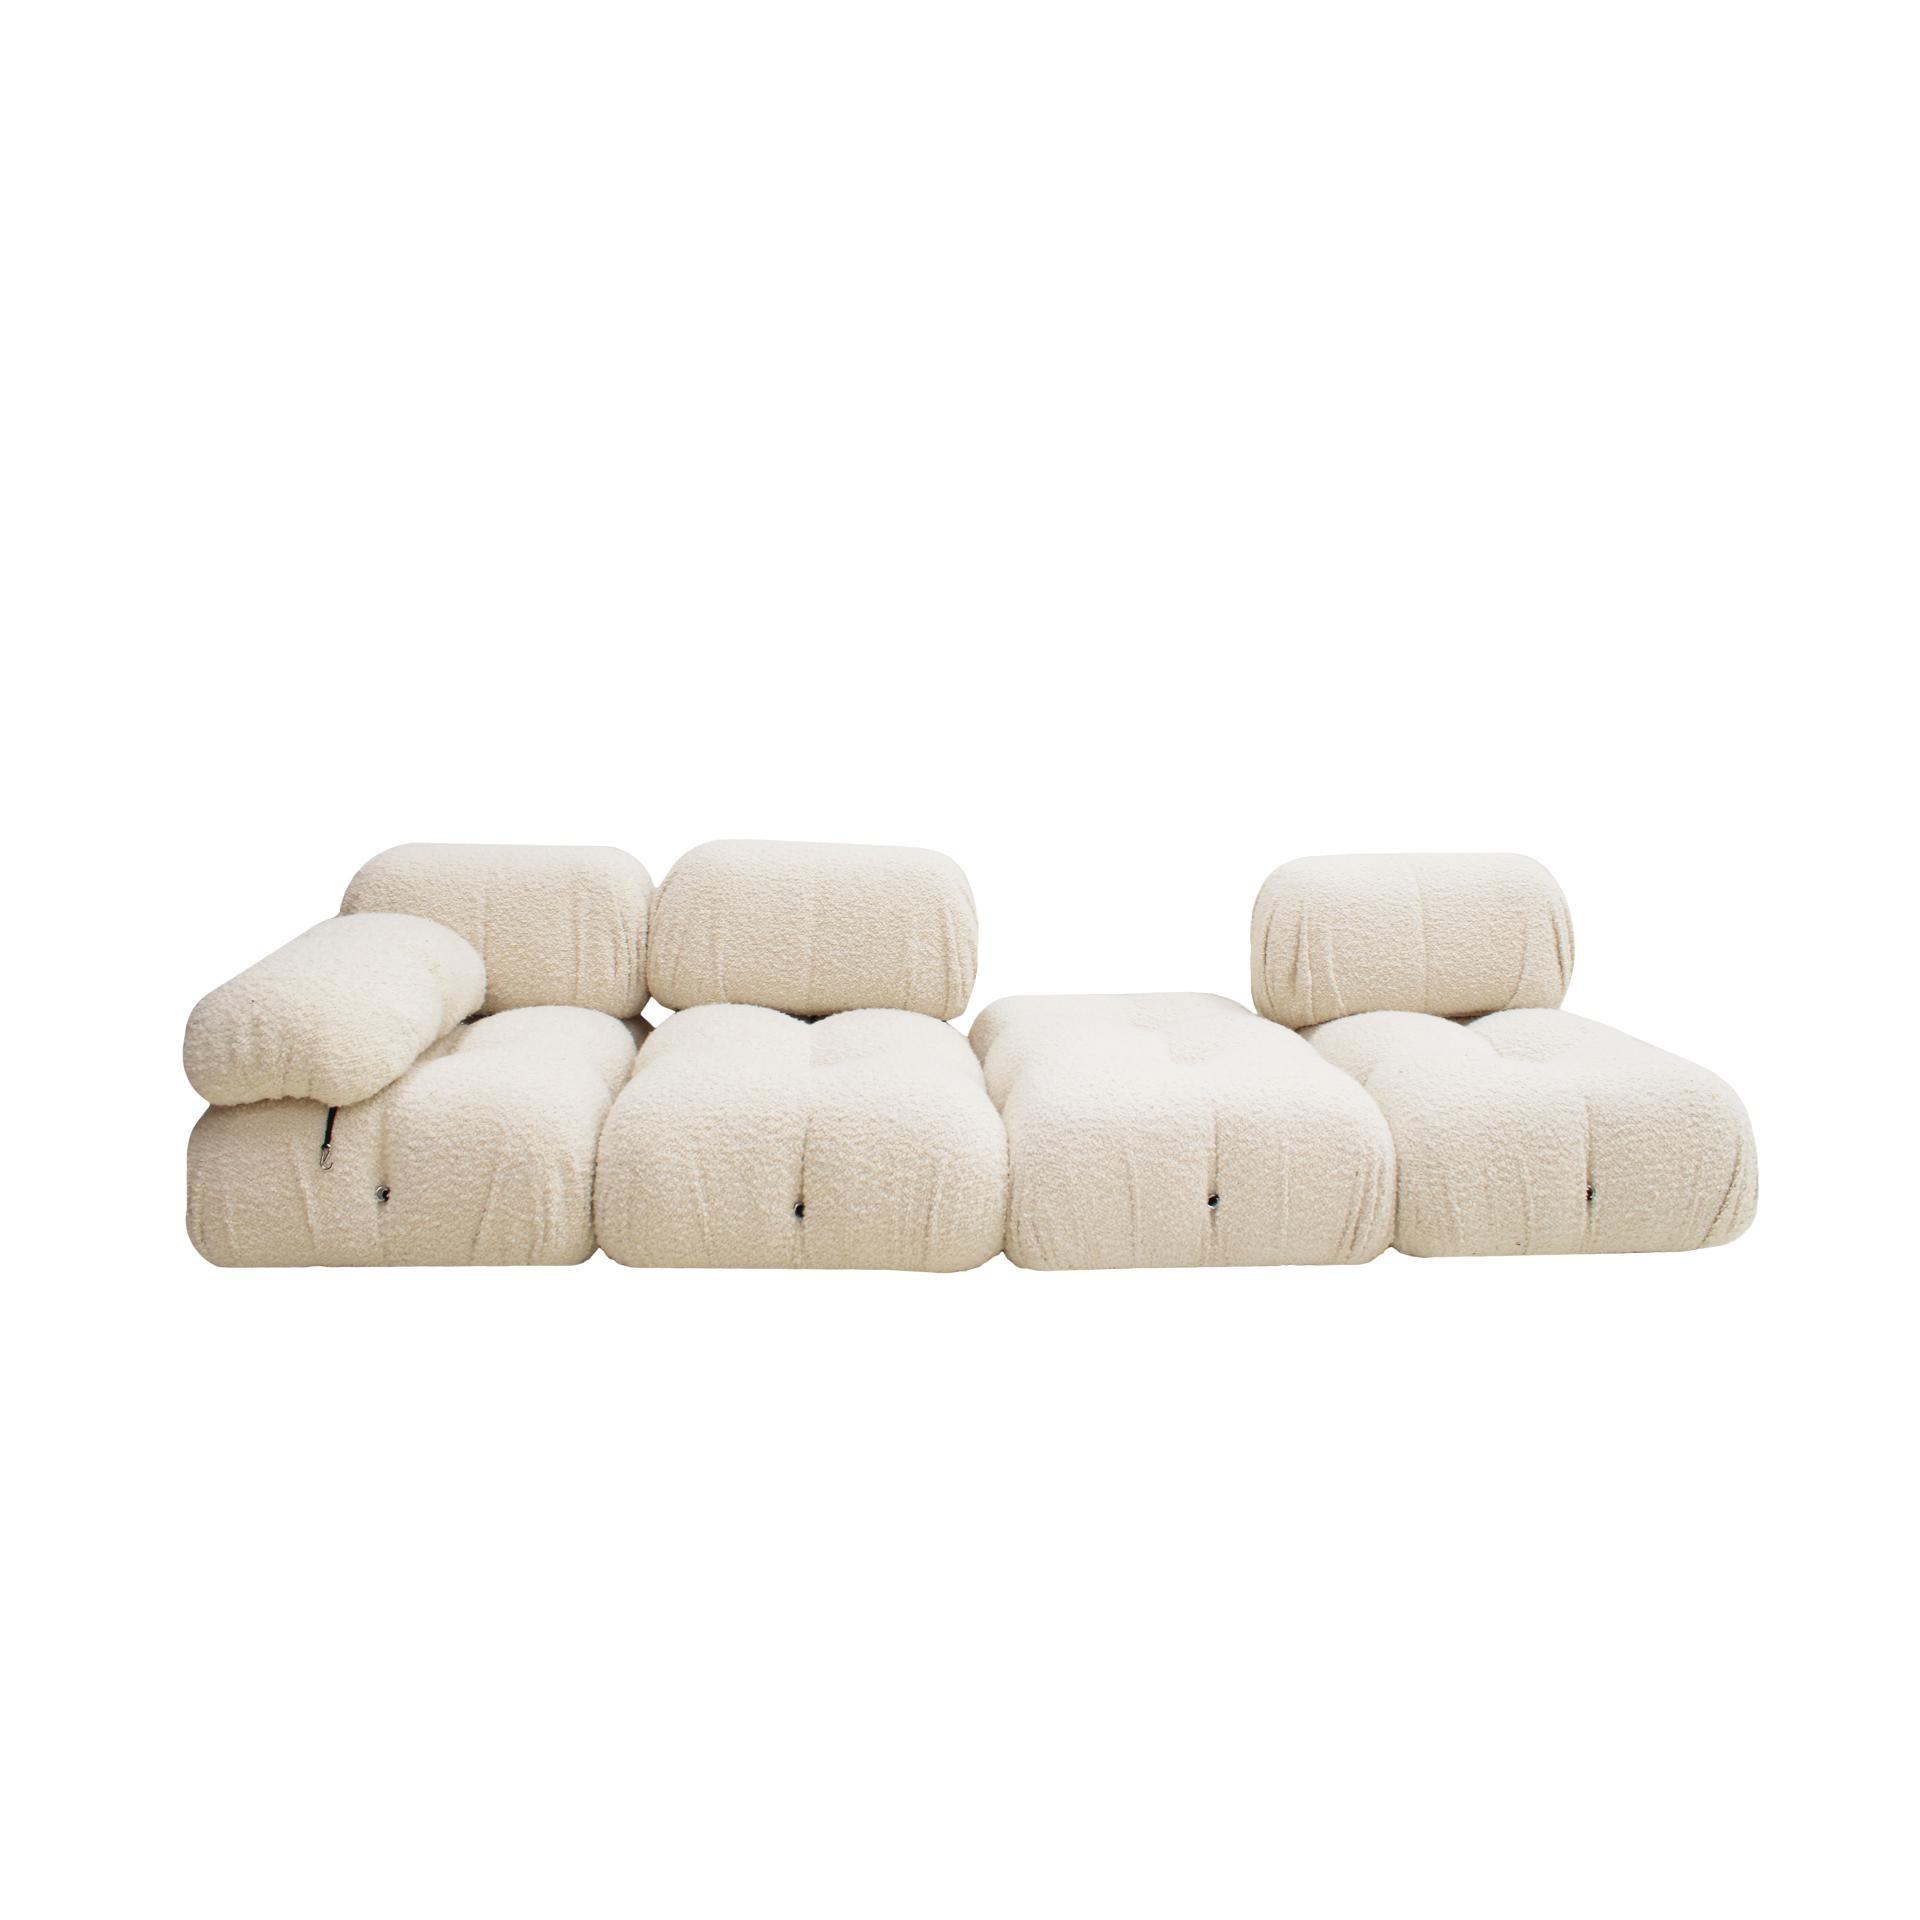 Camaleonda modular sofa designed by Mario Bellini (1935) for C&B Italia in 1972. Composed of 4 large modular seats with backrest, 3 small modular seats with backrest, 1 small module without backrest and 1 shoe remover chair. White bouclé wool